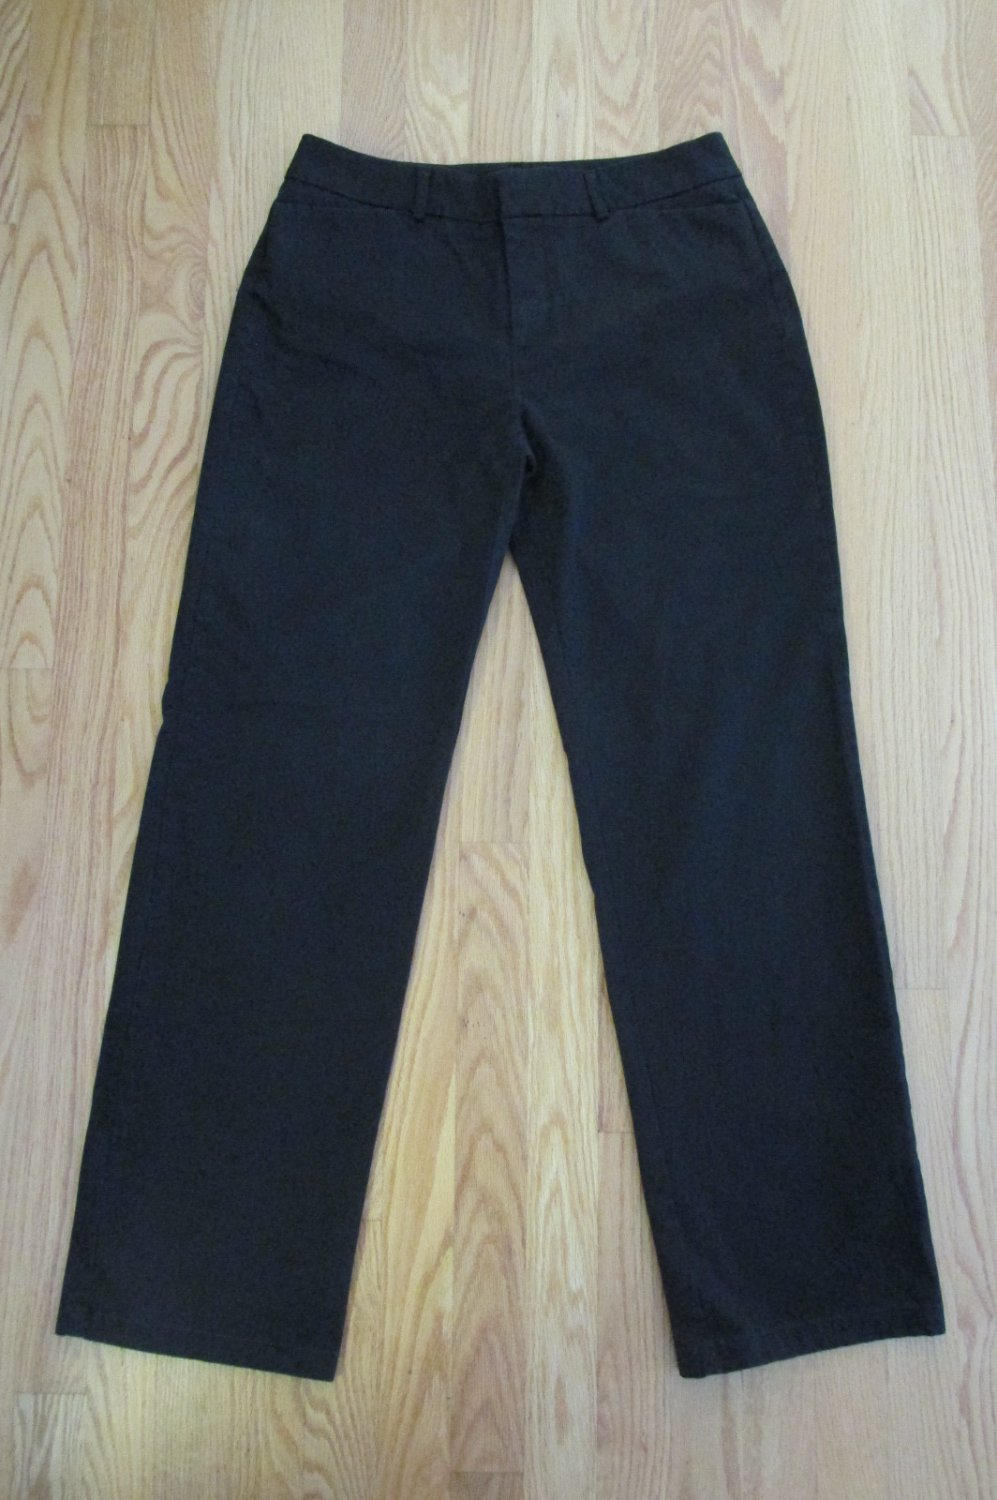 DOCKER'S WOMEN'S SIZE 30 X 30 DRESS PANTS BLACK STRETCH TROUSERS SLACKS ...